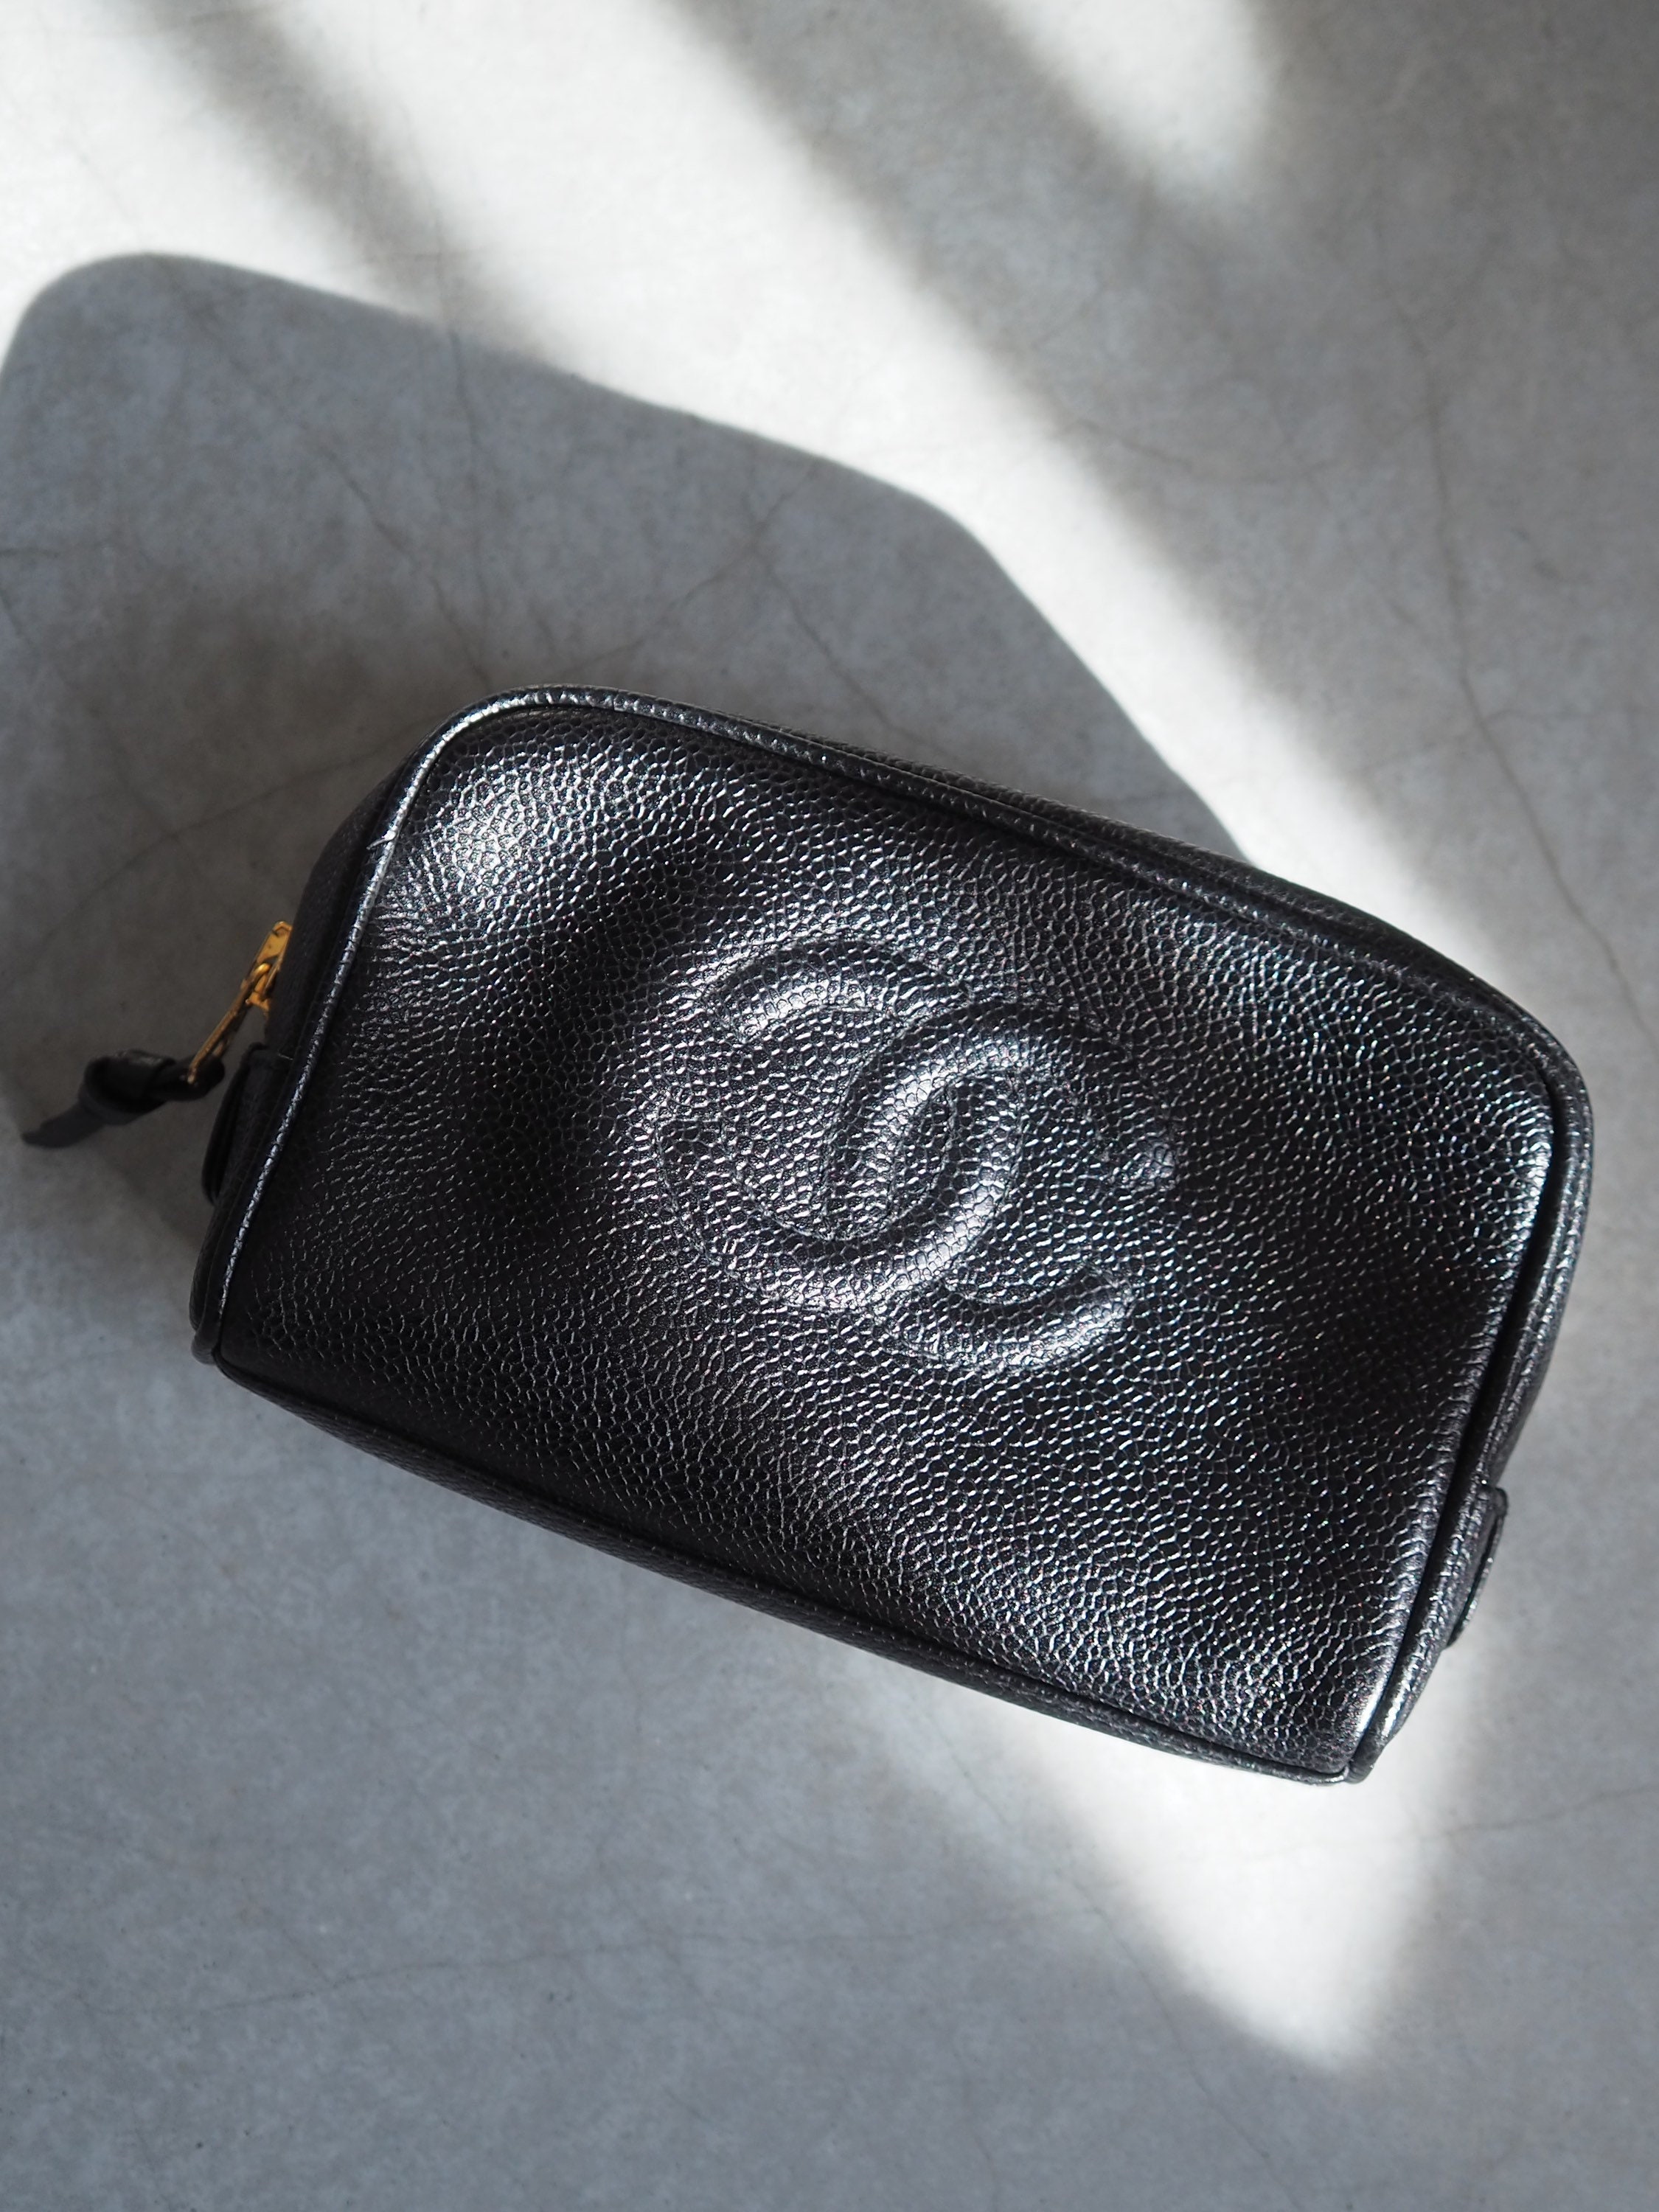 Chanel Vip Gift Bag - 60+ Gift Ideas for 2023